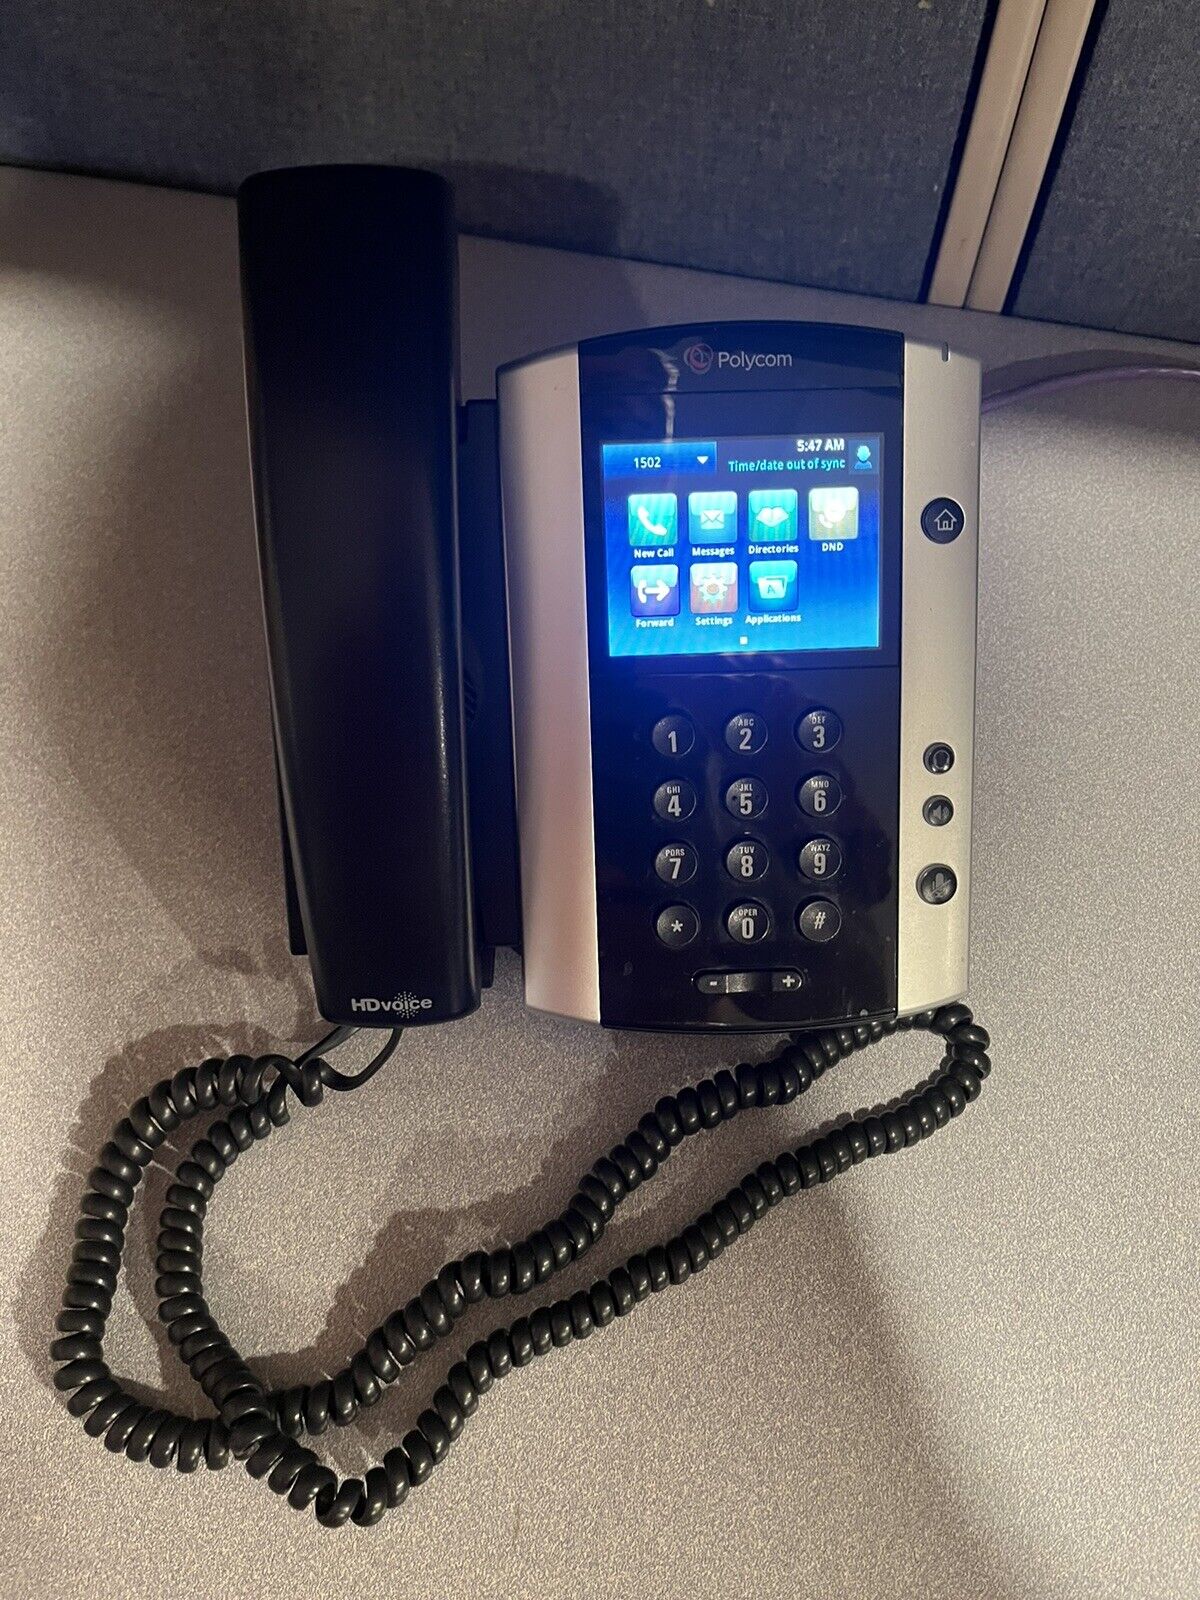 Polycom VVX 500 VoIP Phone 2201-44500-001 base handset business phone